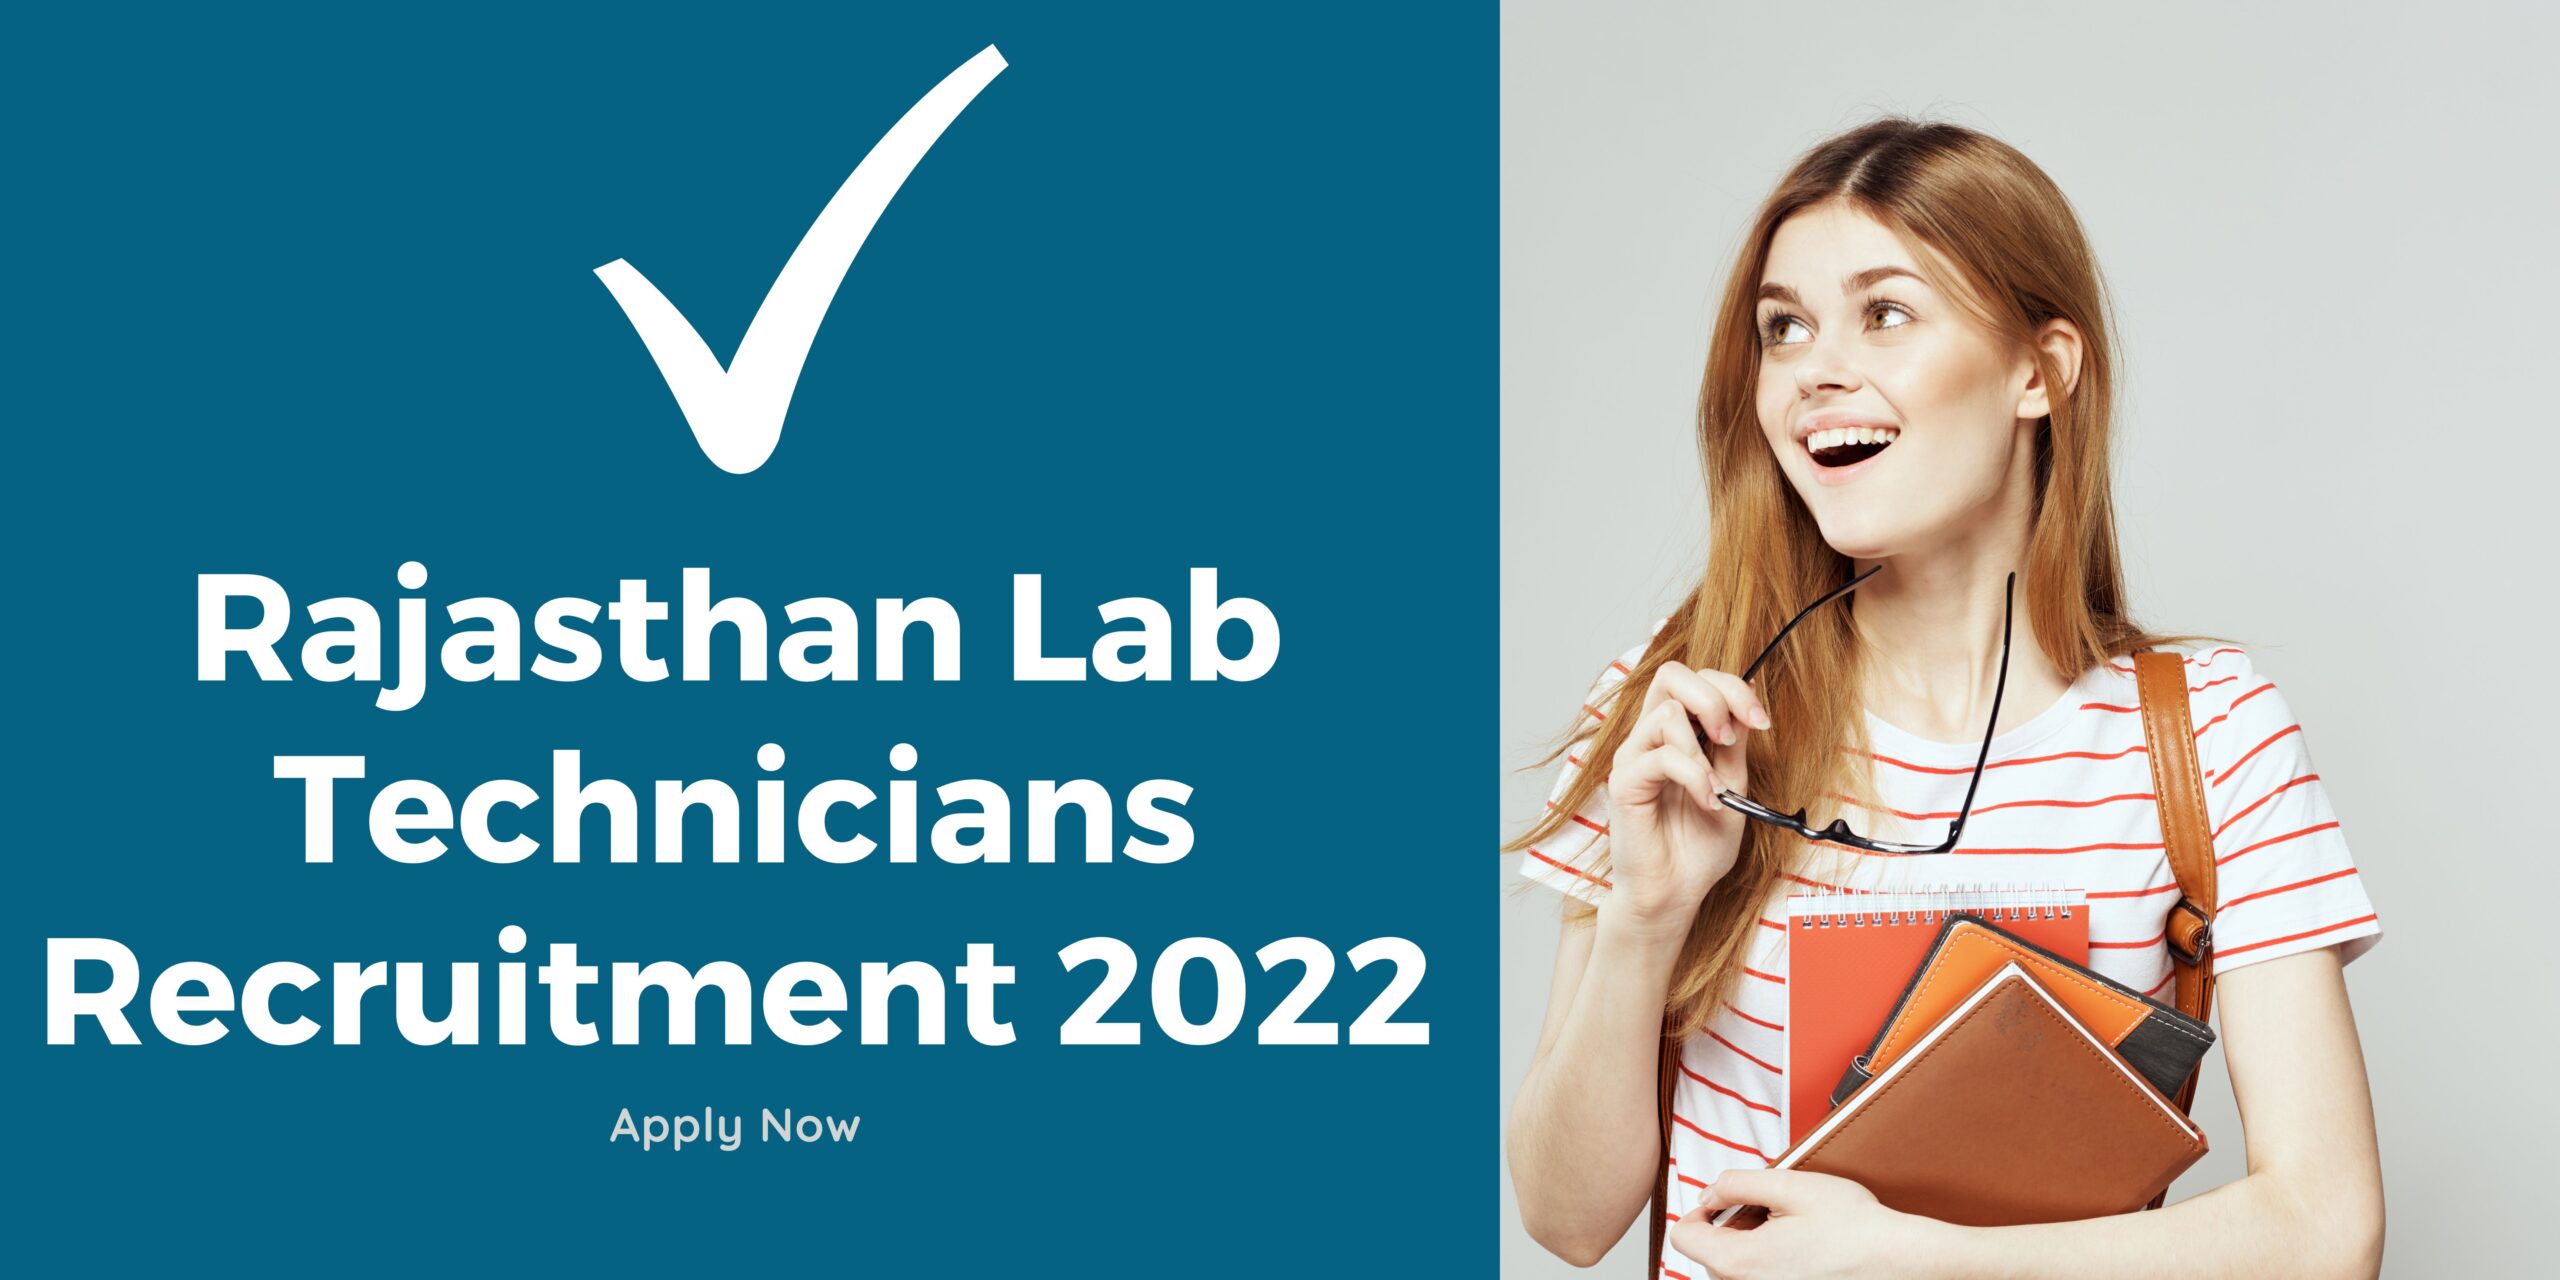 Rajasthan Lab Technicians Recruitment 2022